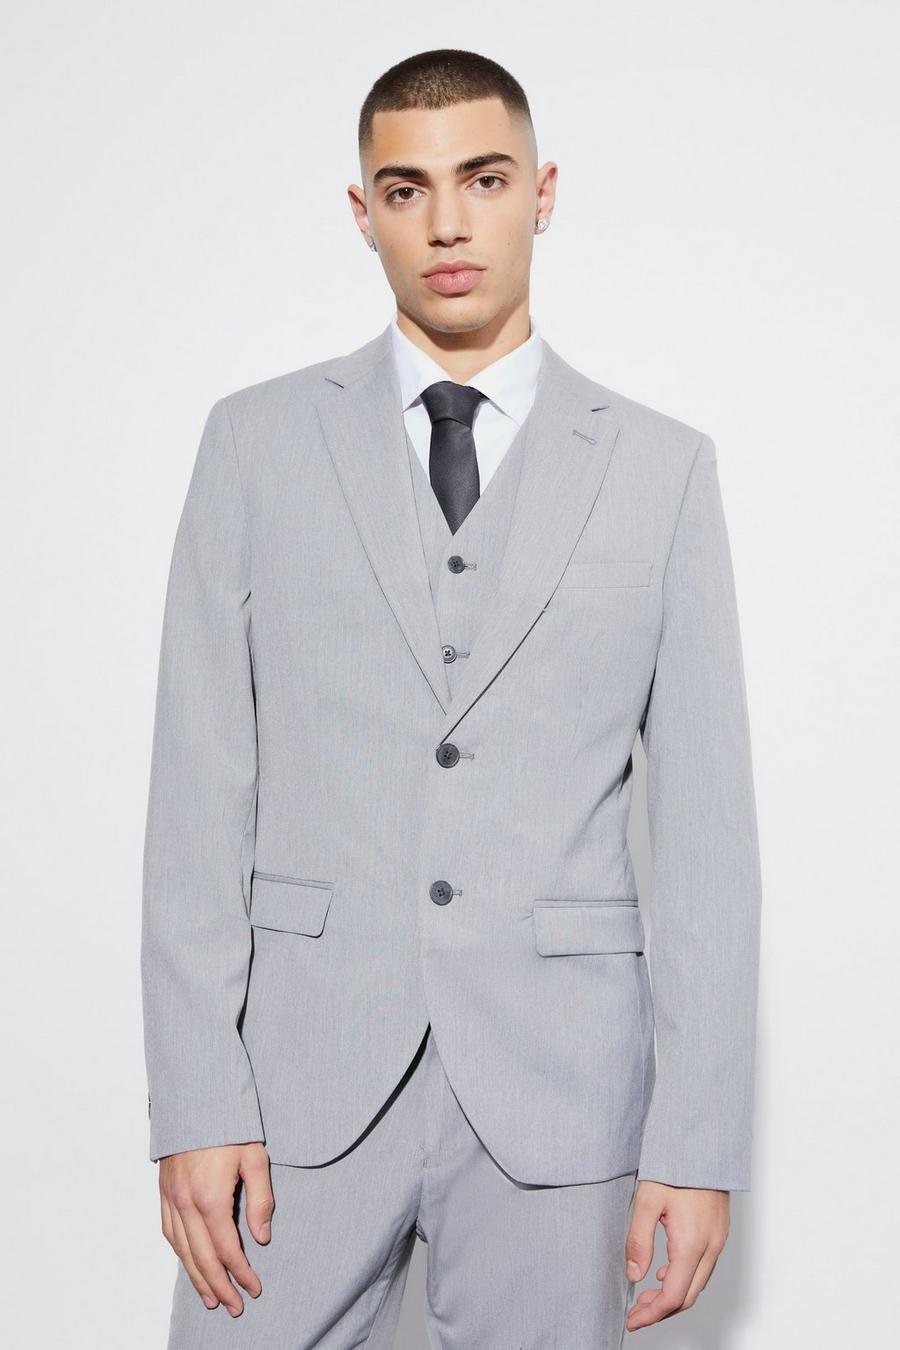 Grey grigio ז'קט חליפה בגזרה צרה עם רכיסה אחת